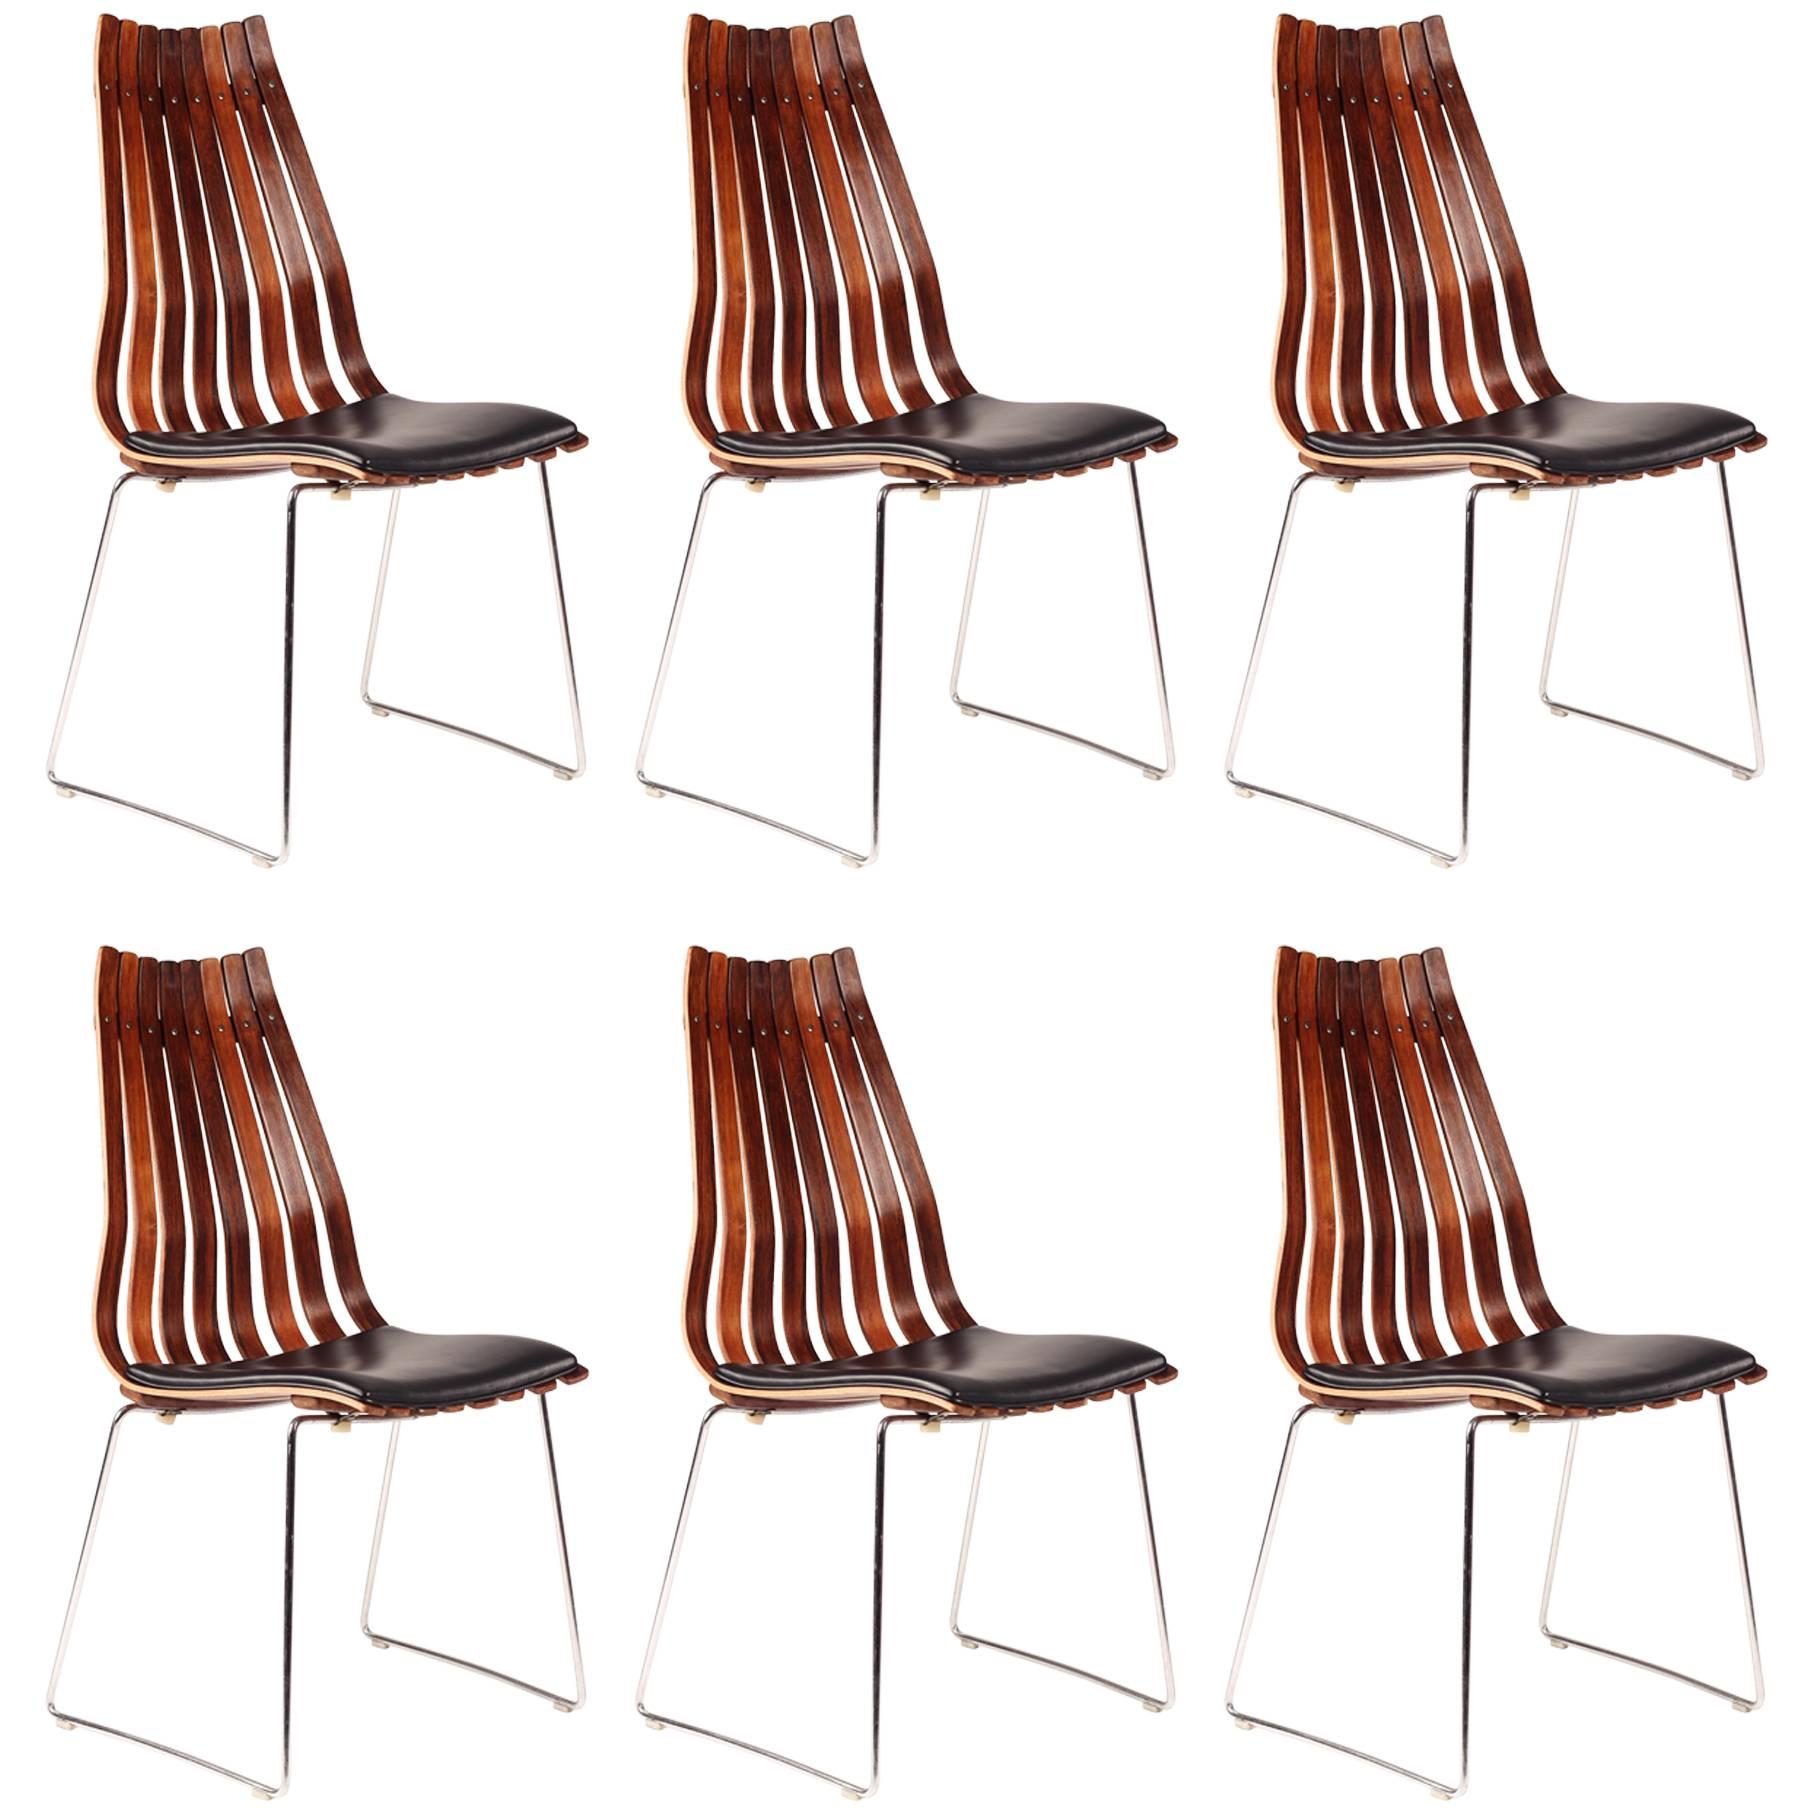 Scandinavian Modern Rosewood Dining Chairs by Hans Brattrud, set of Six.